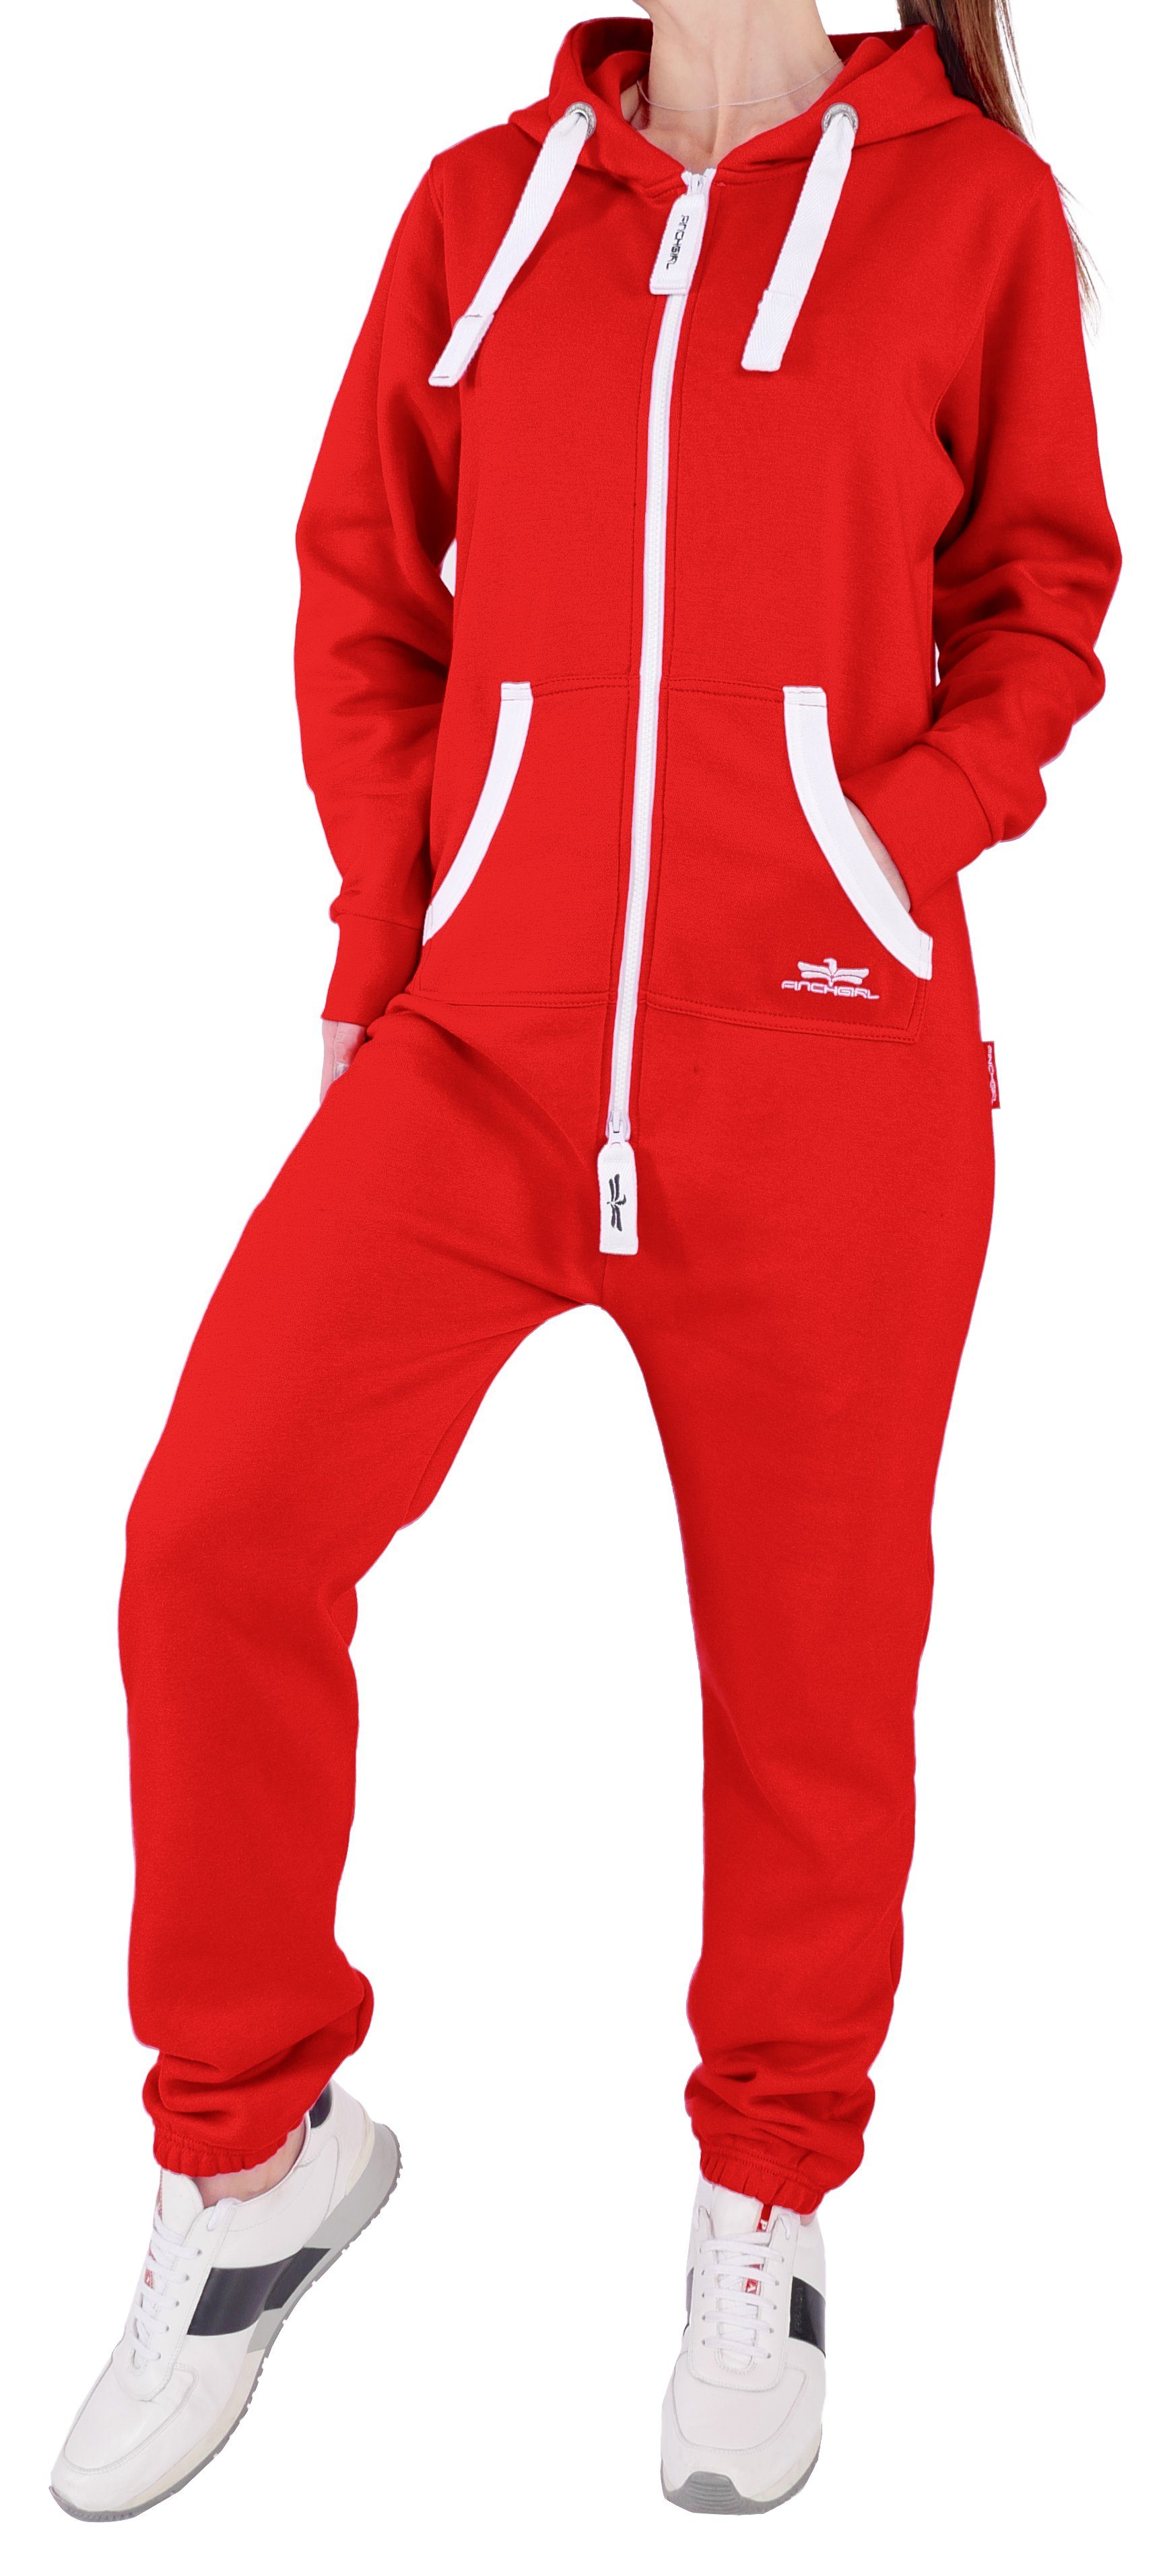 Finchgirl Jumpsuit FG18R Damen Jumpsuit Jogger Jogging Anzug Trainingsanzug Overall Rot